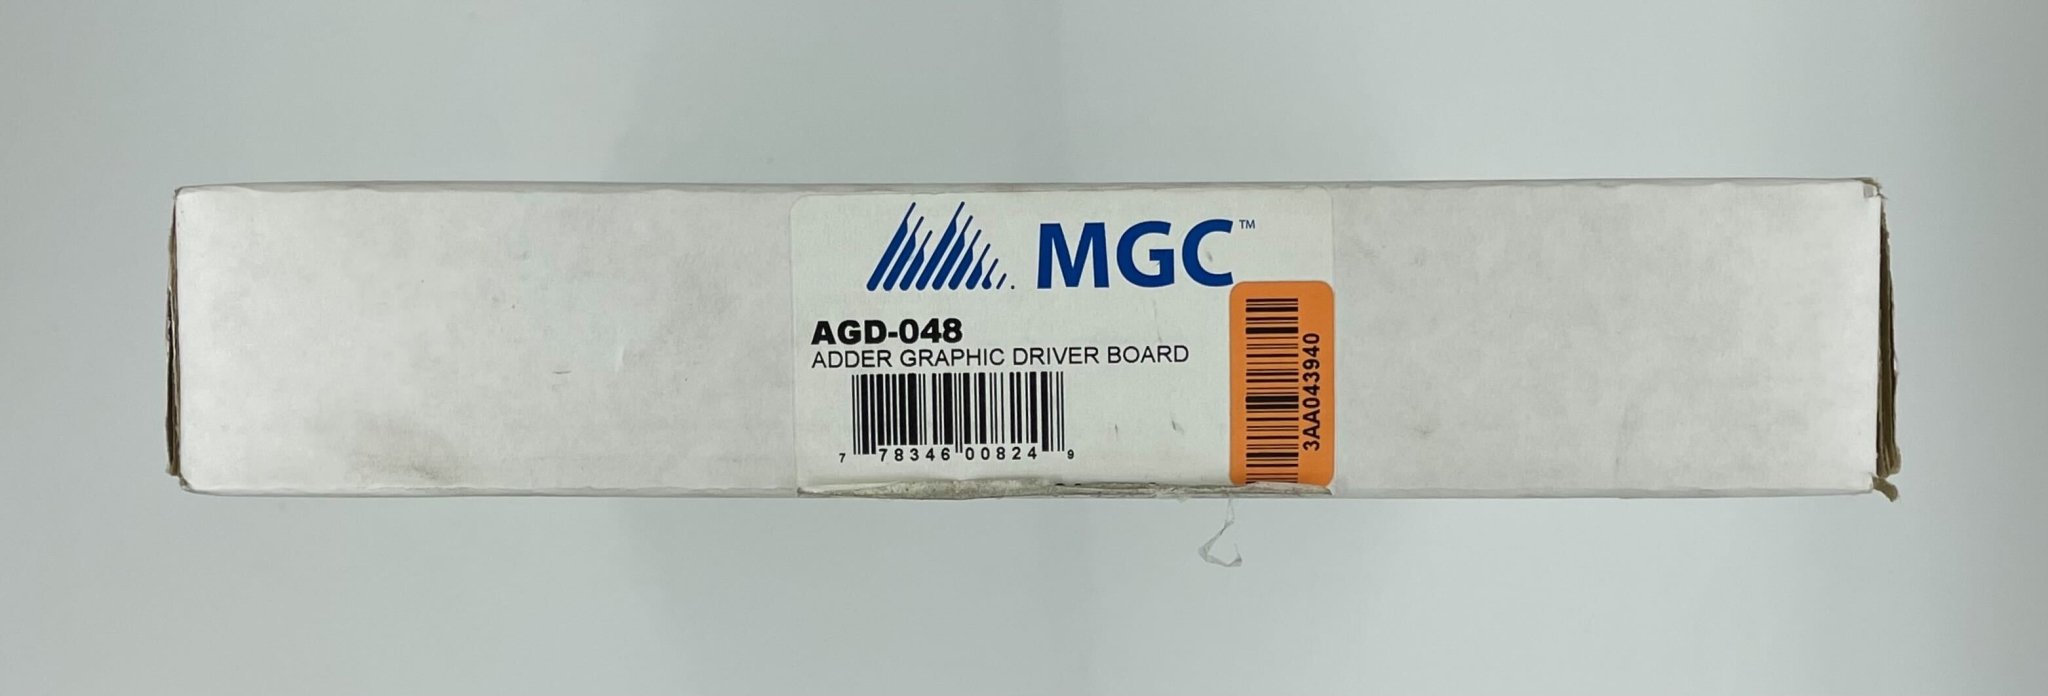 Mircom AGD-048 Graphic Driver Board - The Fire Alarm Supplier